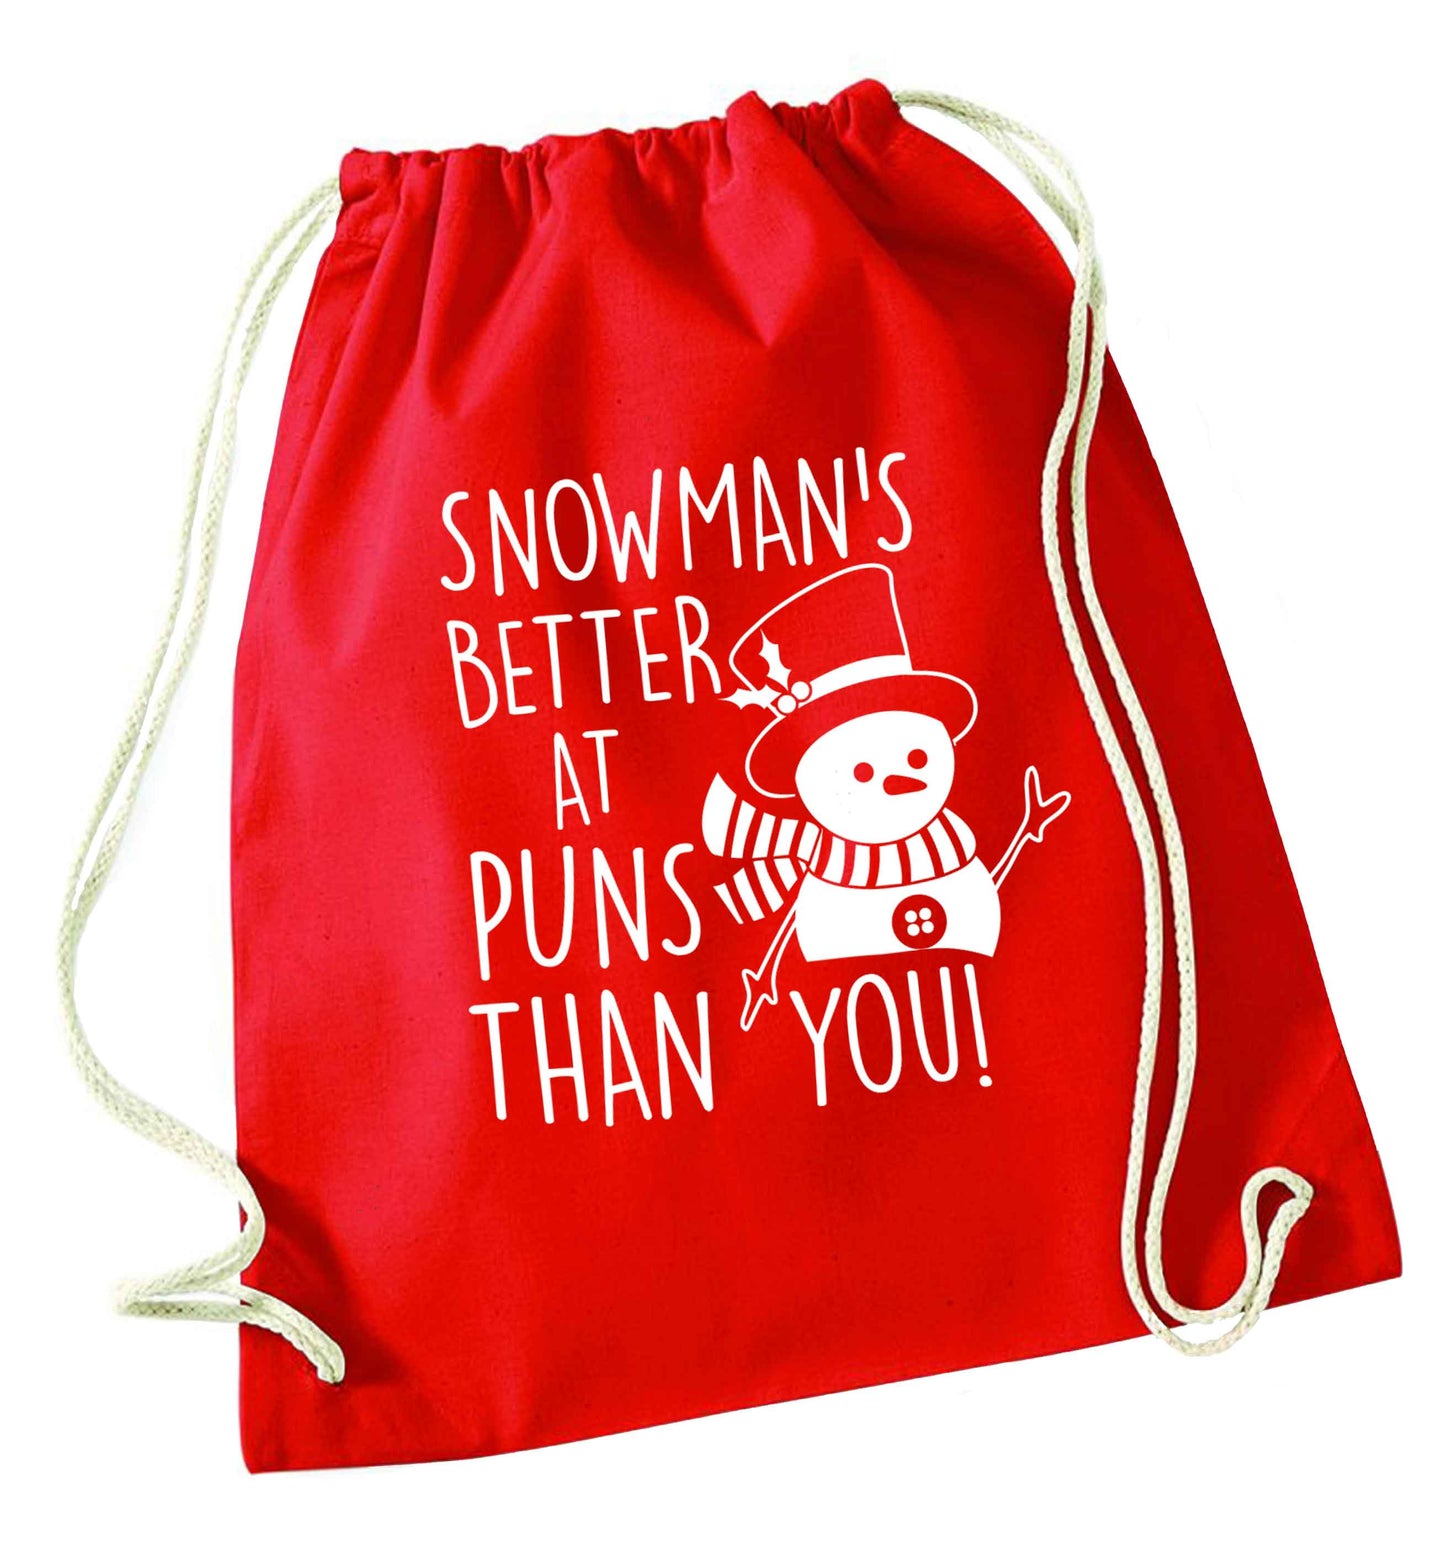 Snowman's Puns You red drawstring bag 